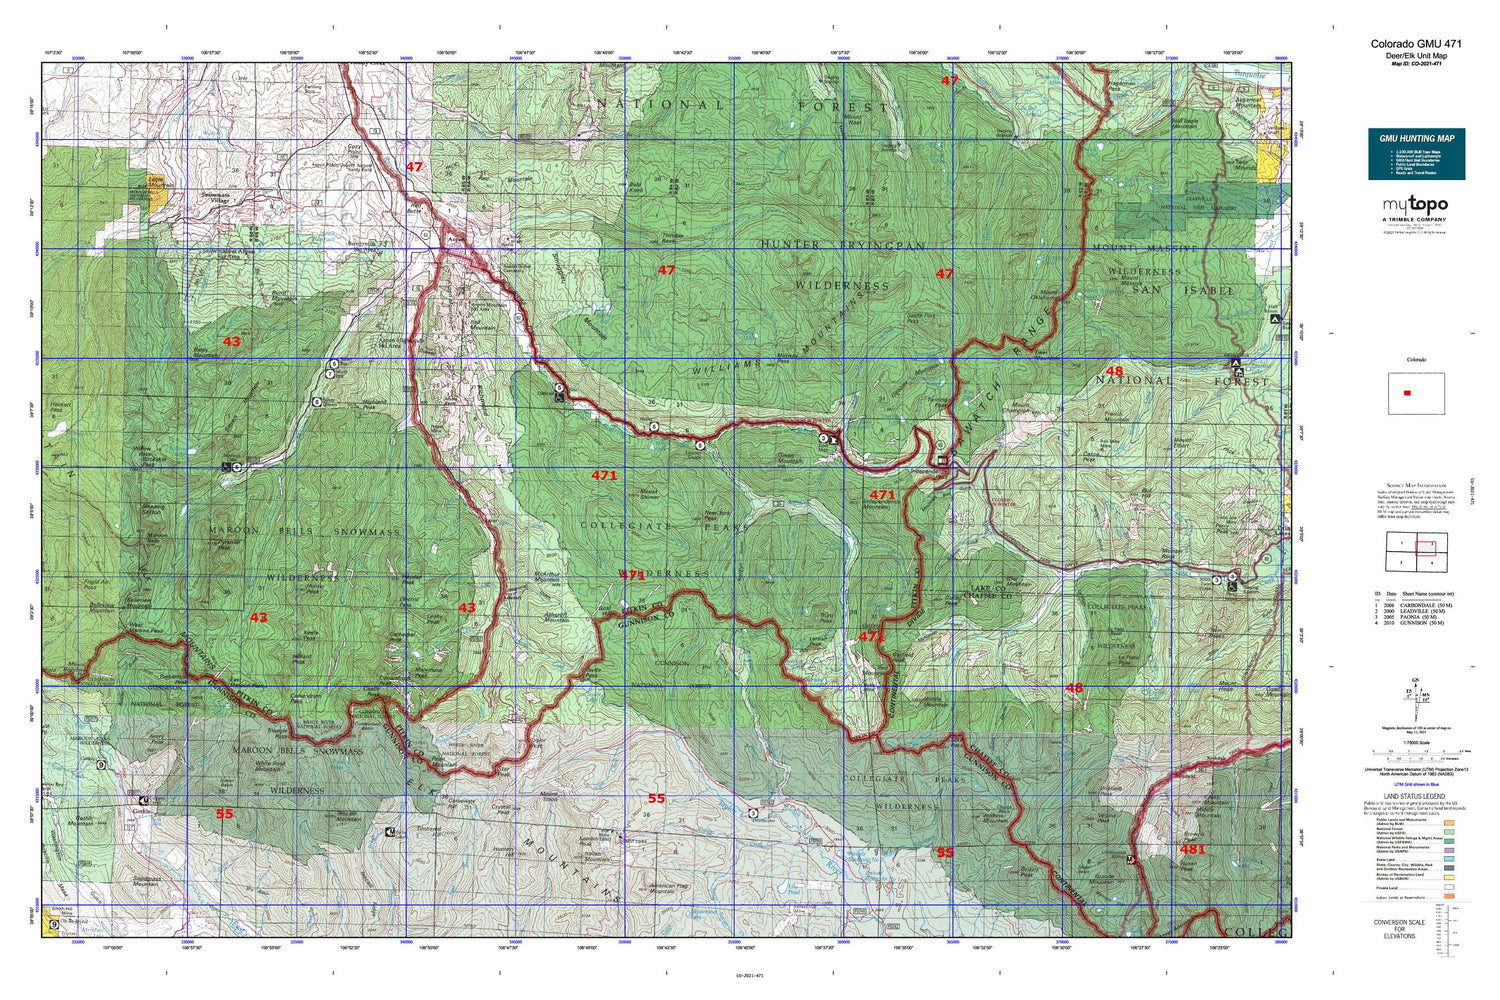 Colorado GMU 471 Map Image